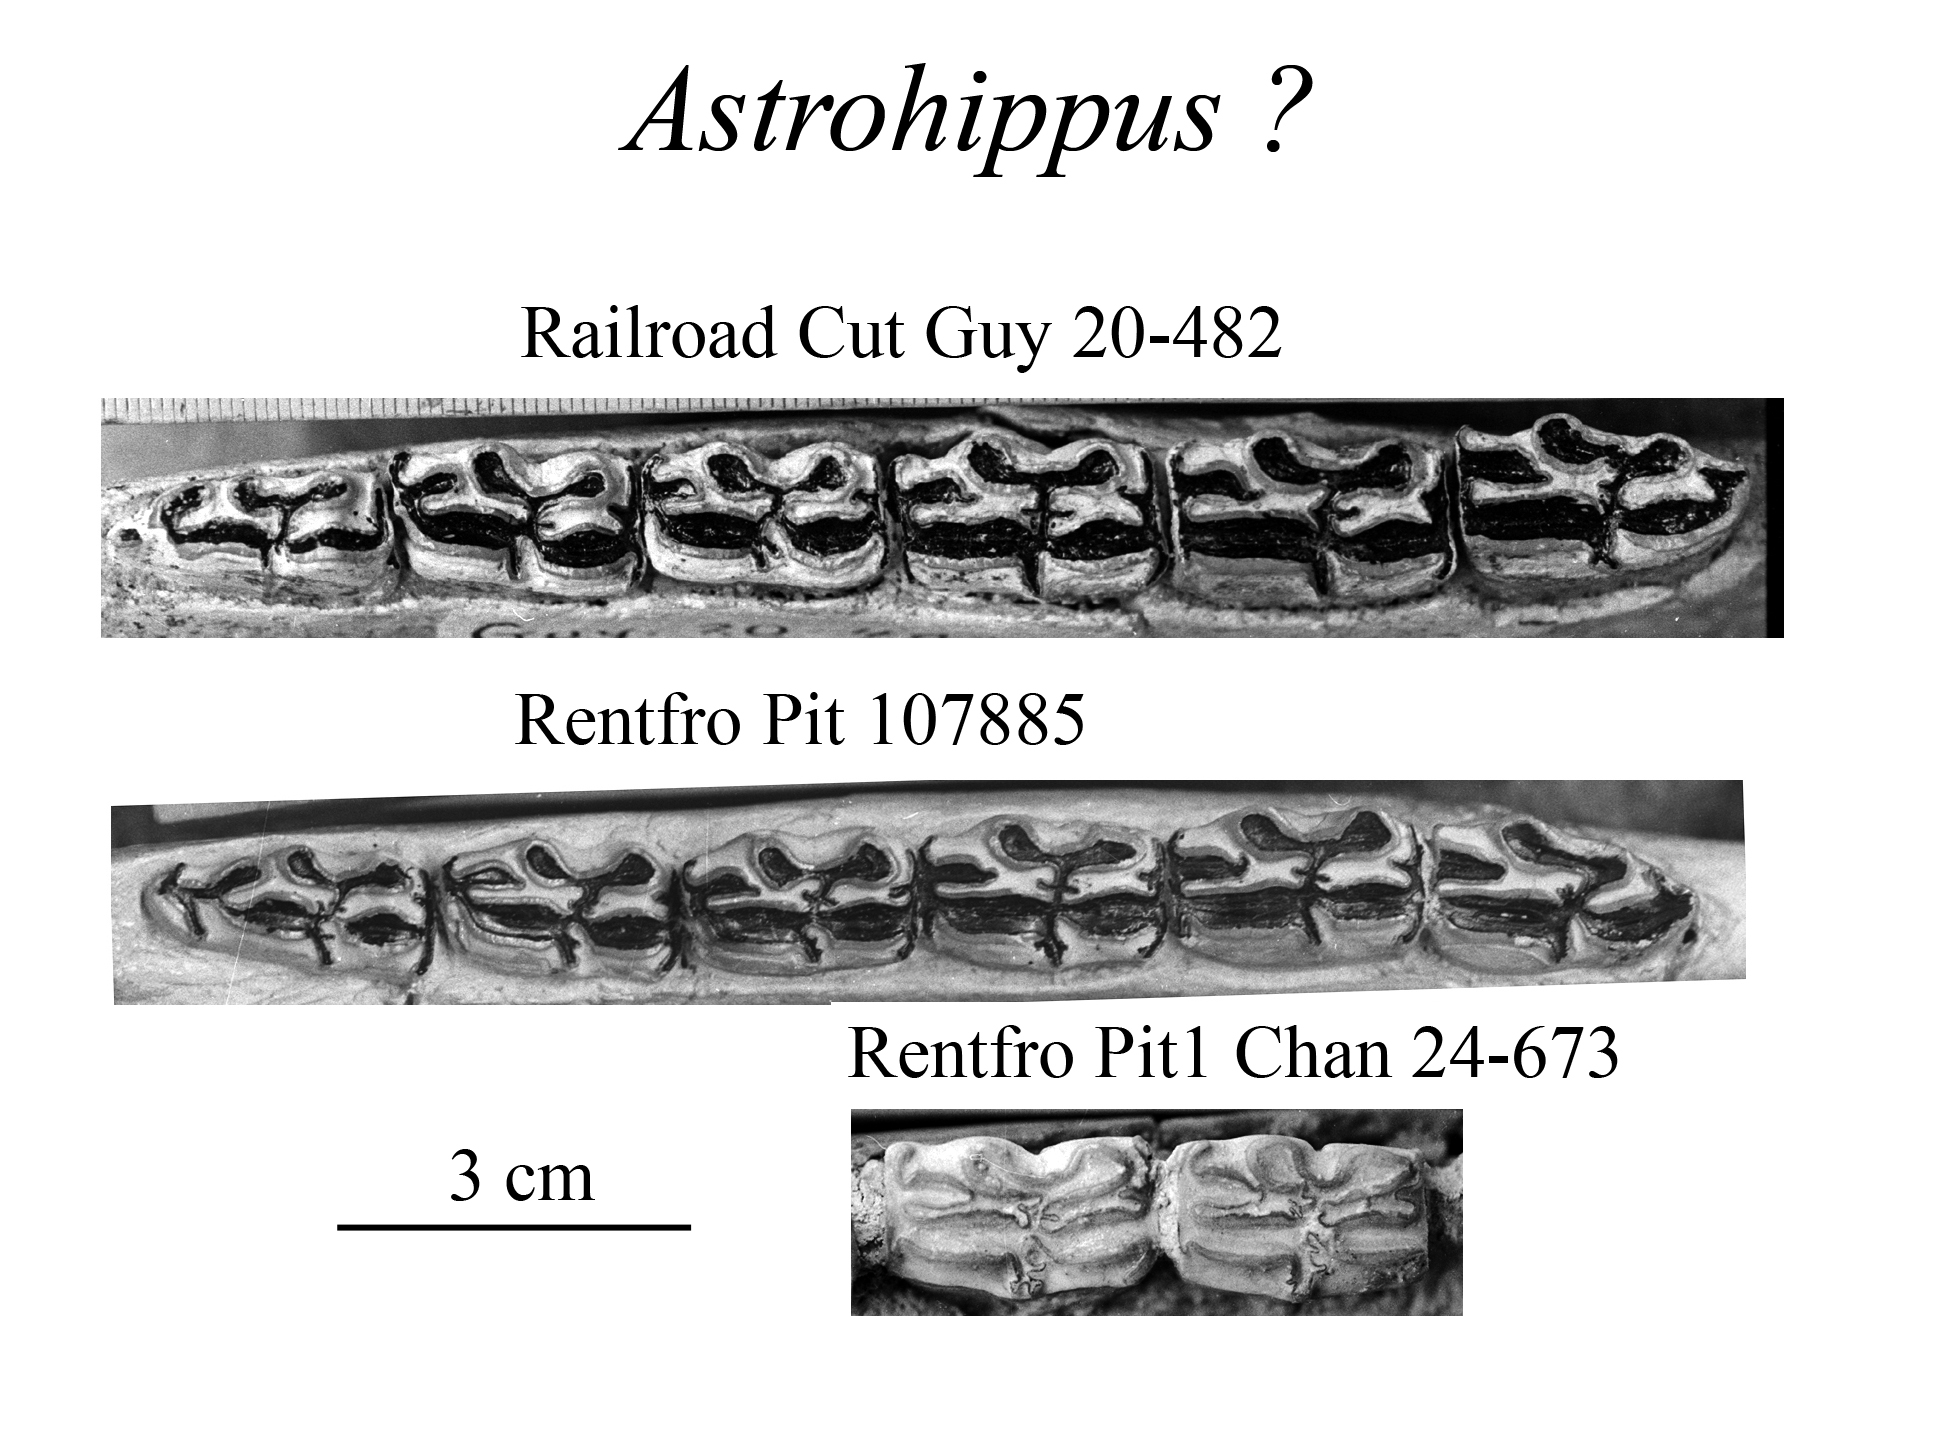 "Astrohippus" lower cheek teeth